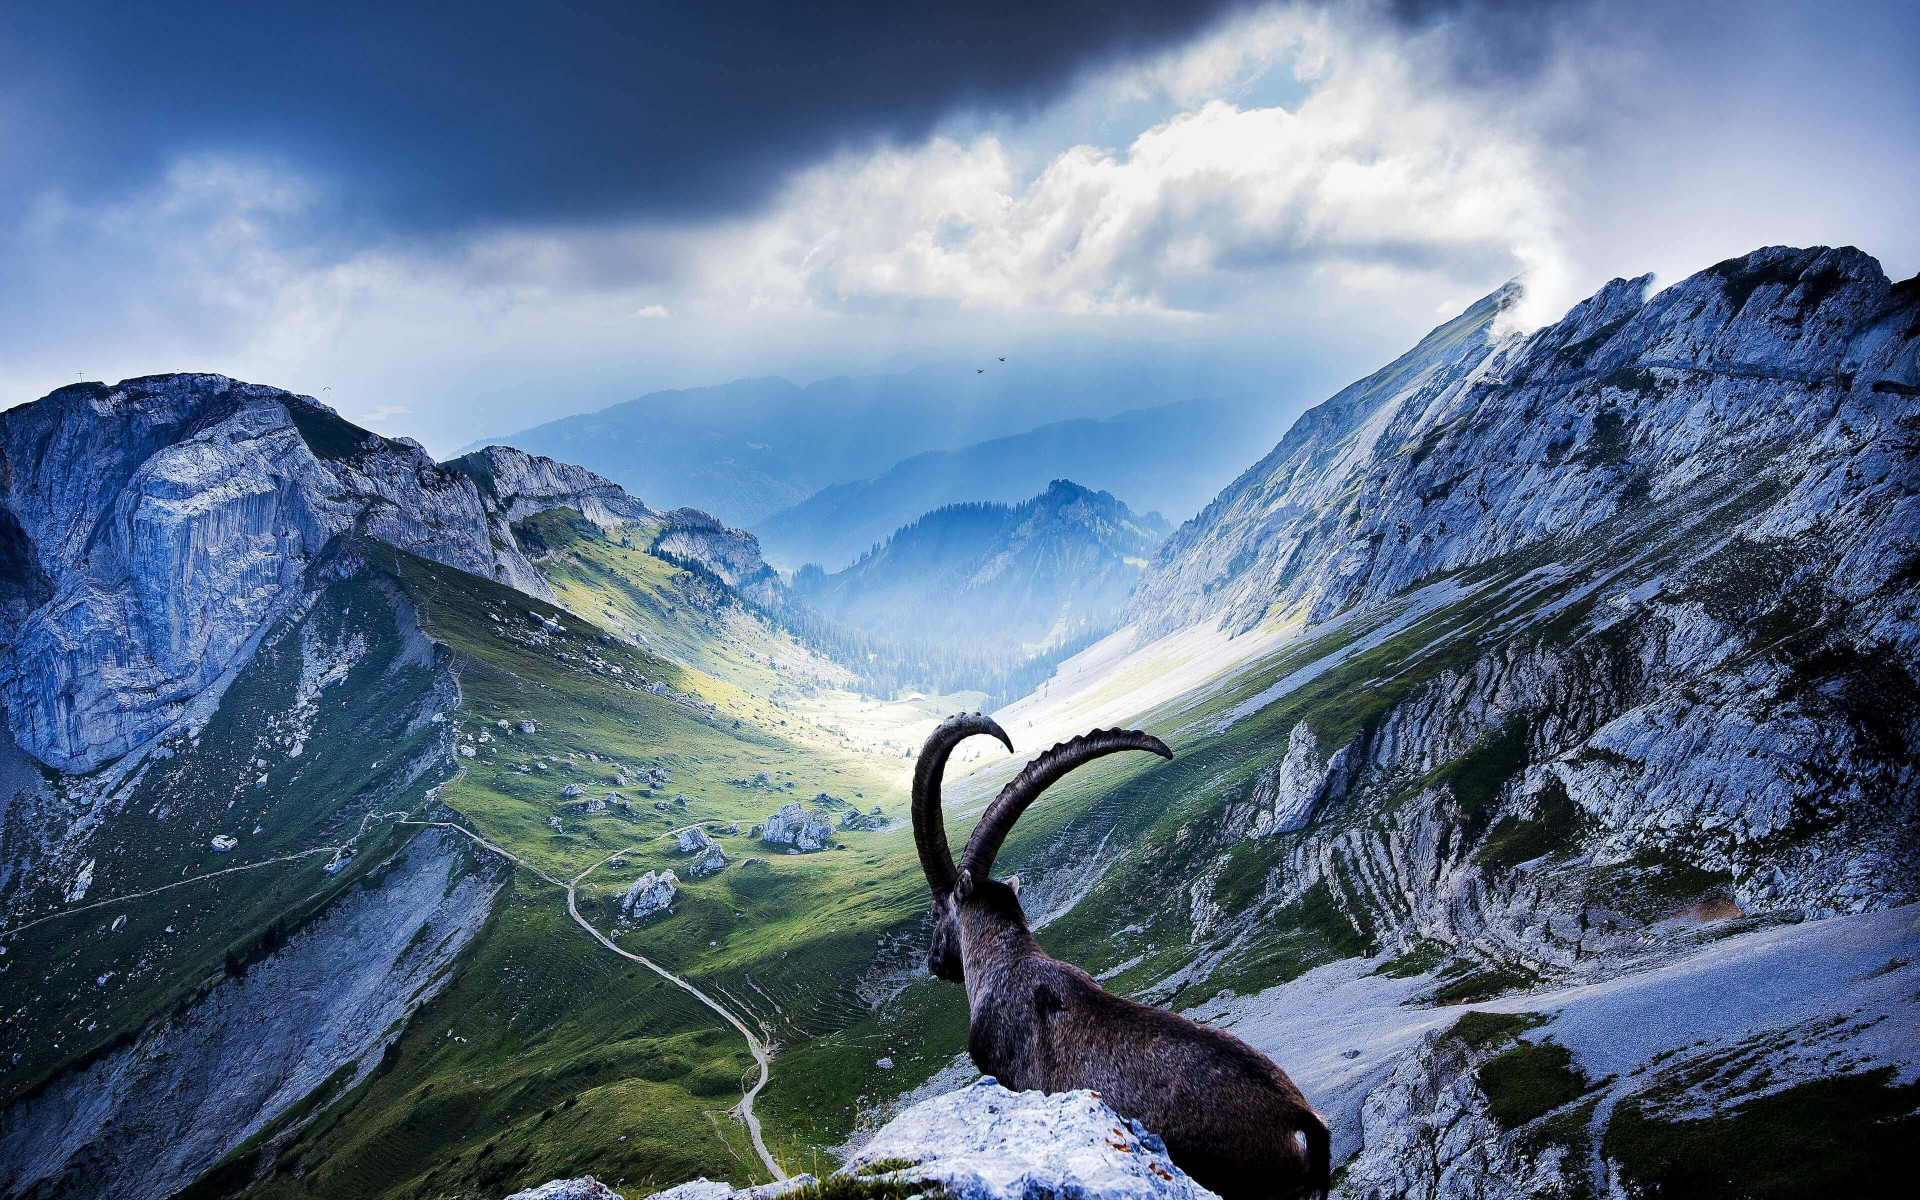 Goat at Pilatus, Switzerland Wallpaper for Desktop 1920x1200